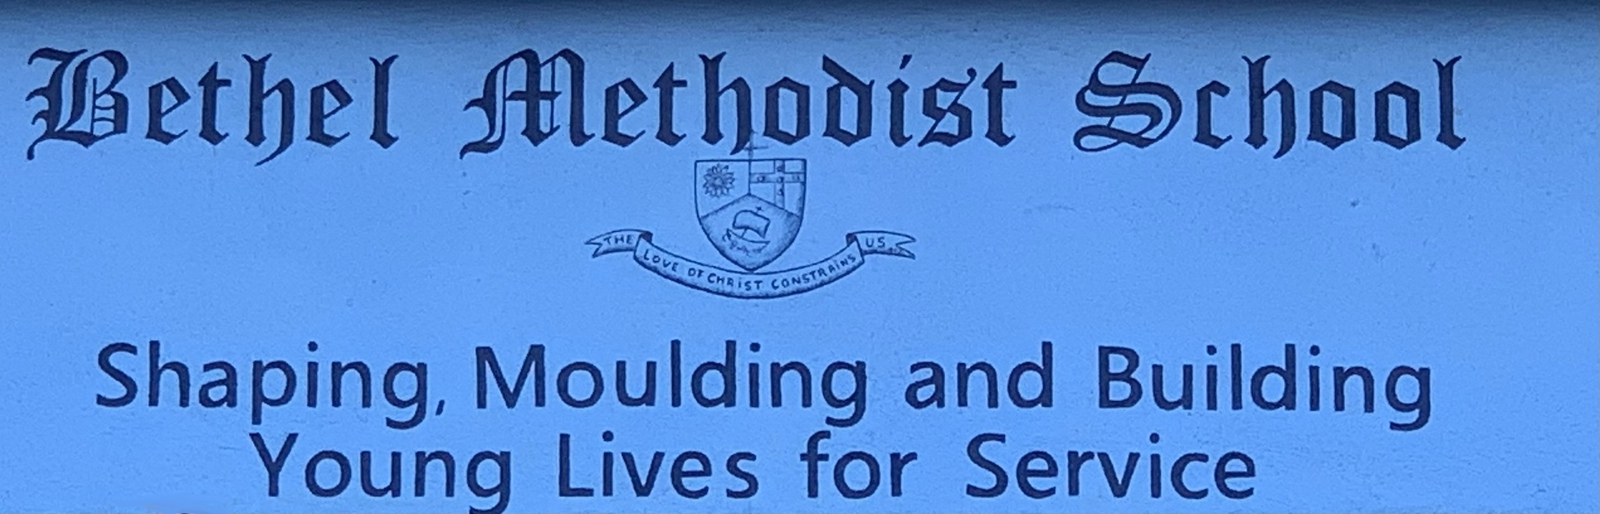 Bethel Methodist School